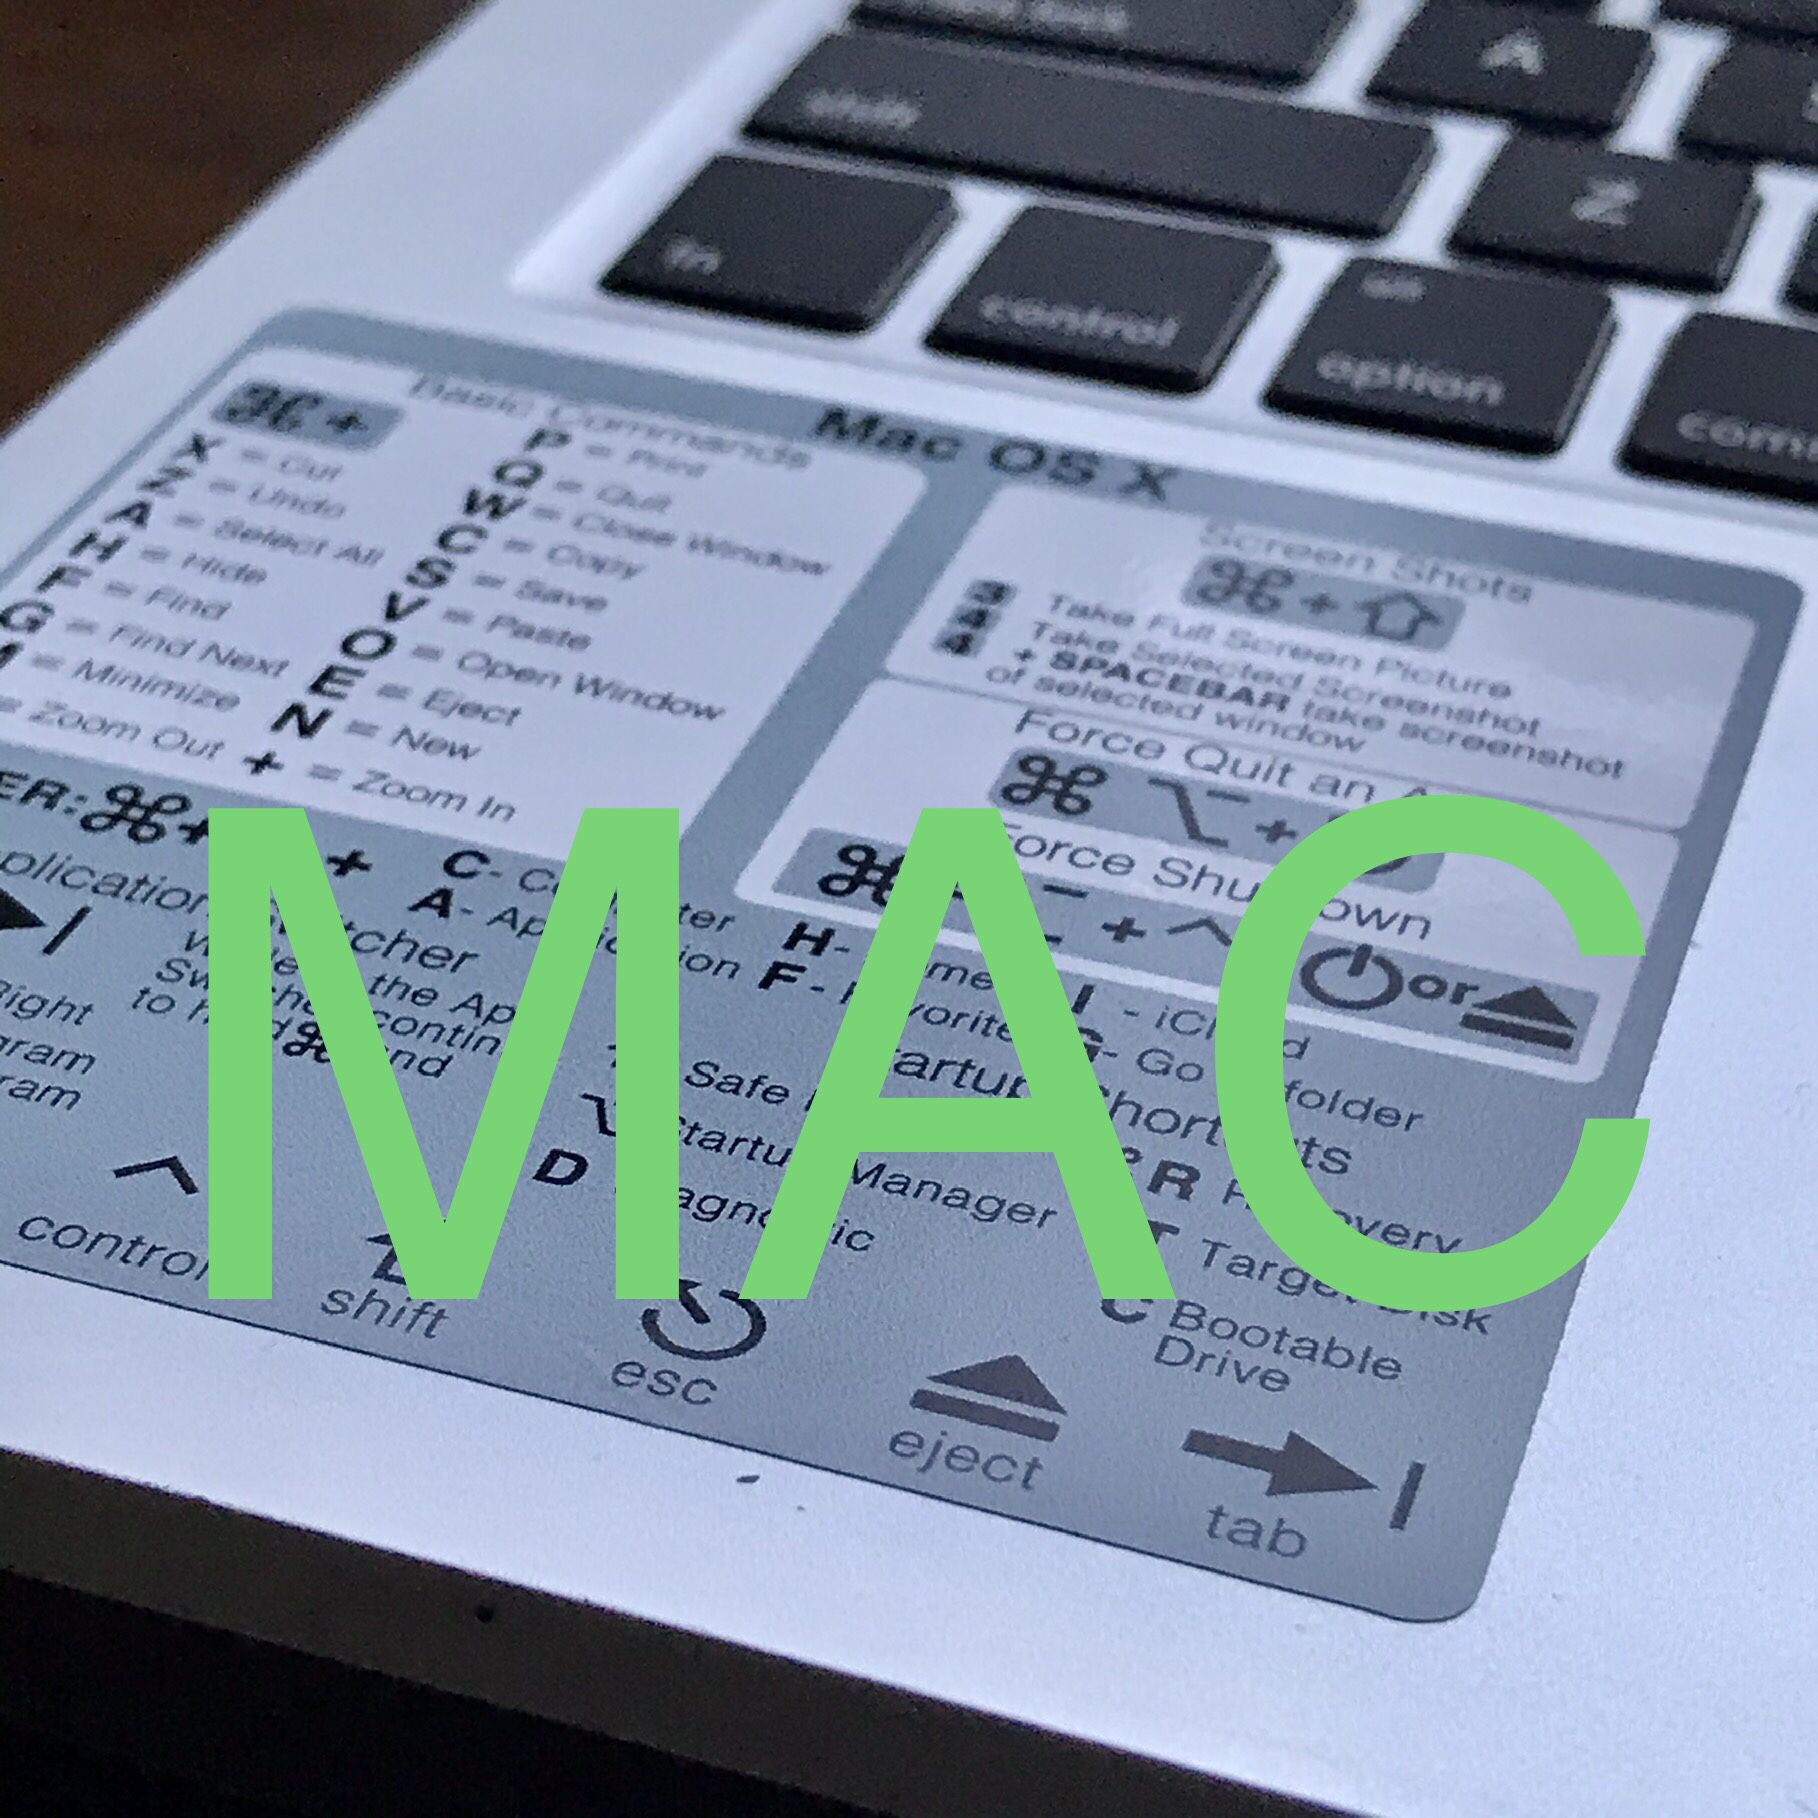 Apple MacBook Pro or Air iMac MacOs shortcuts -very handy-durable vinyl sticker